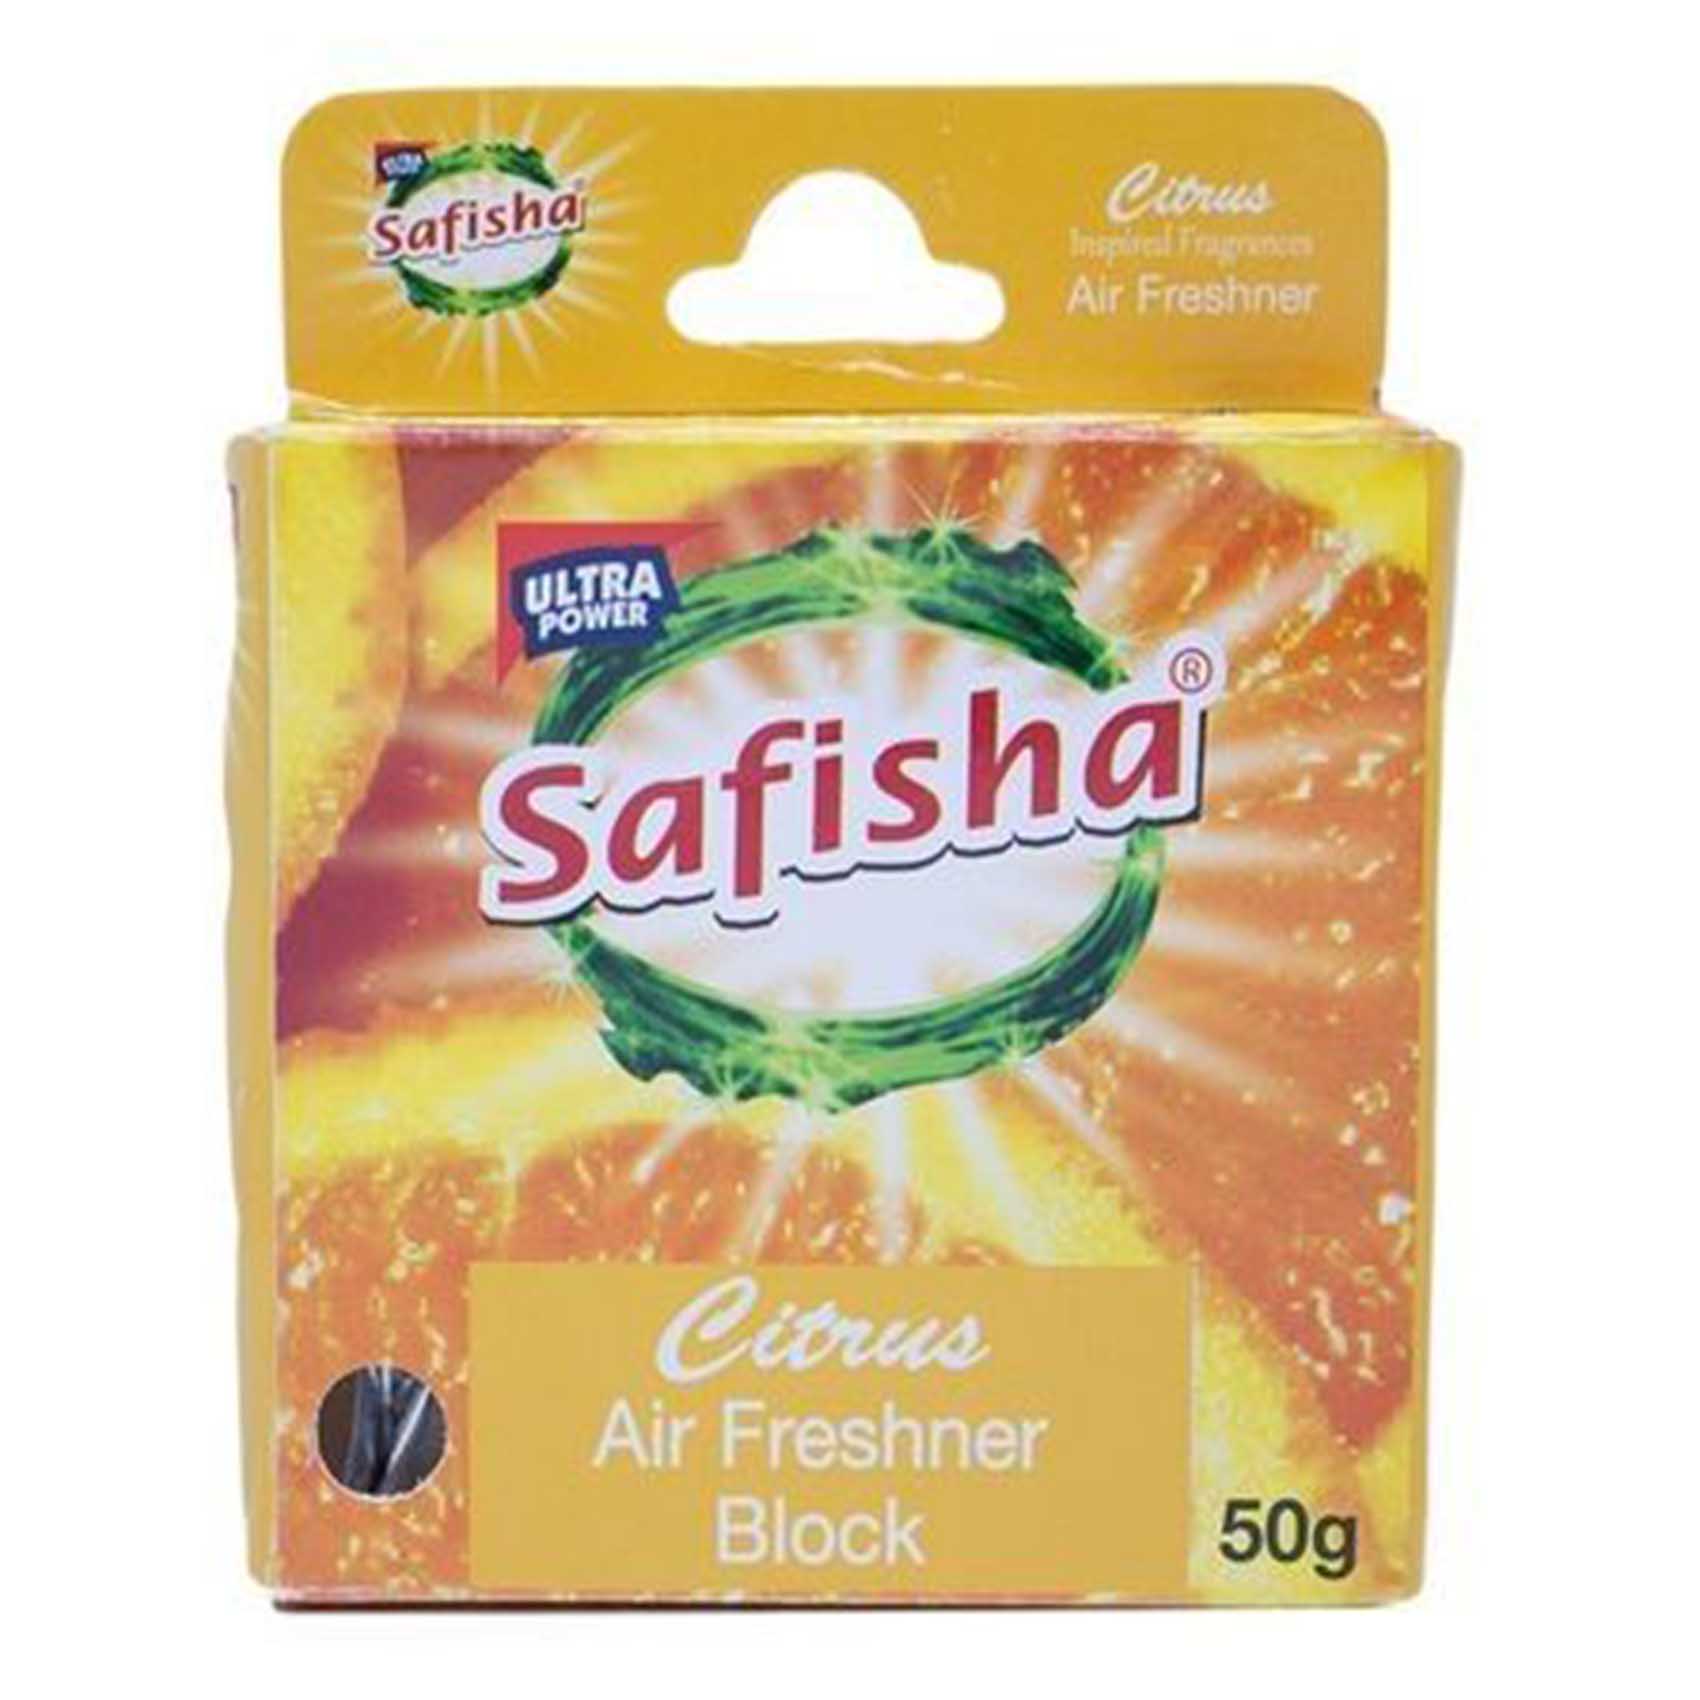 Safisha Airfreshn Block Citrus 50G